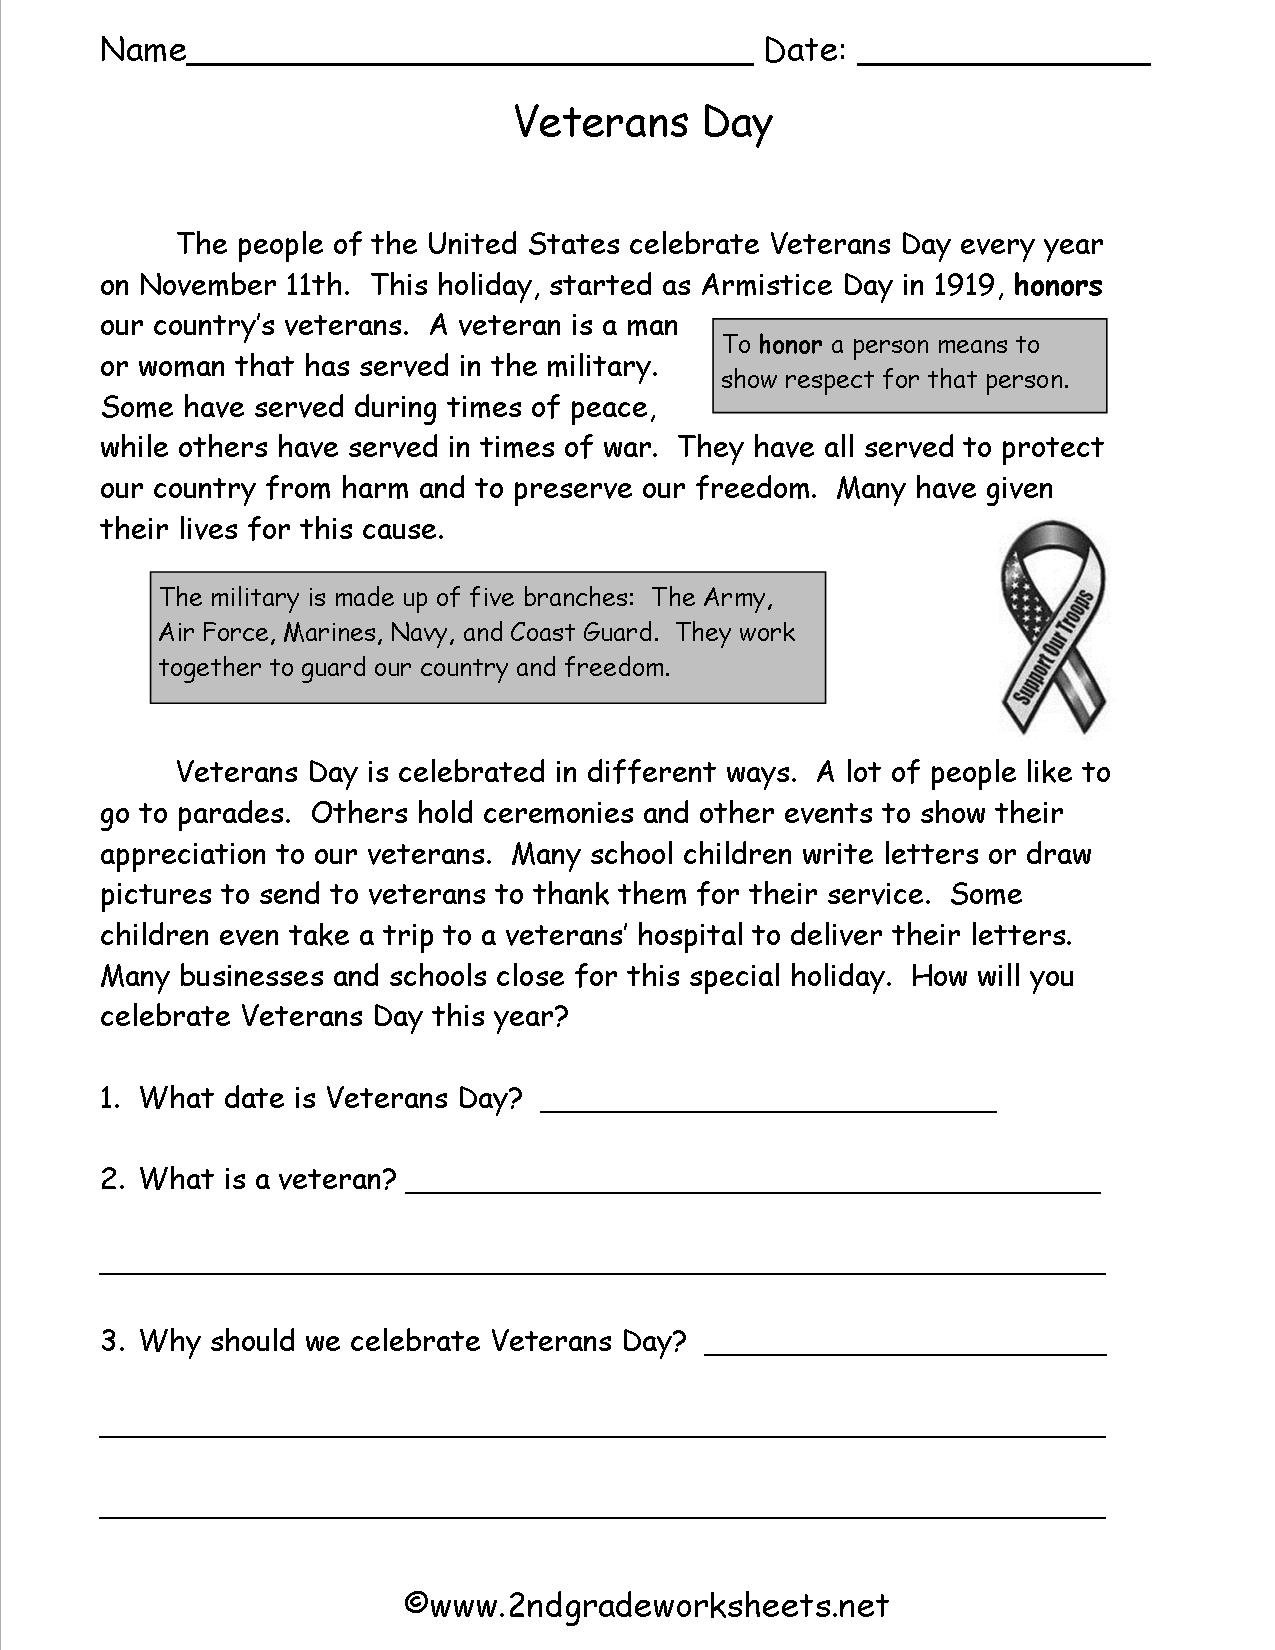 Veterans Day Worksheets Image